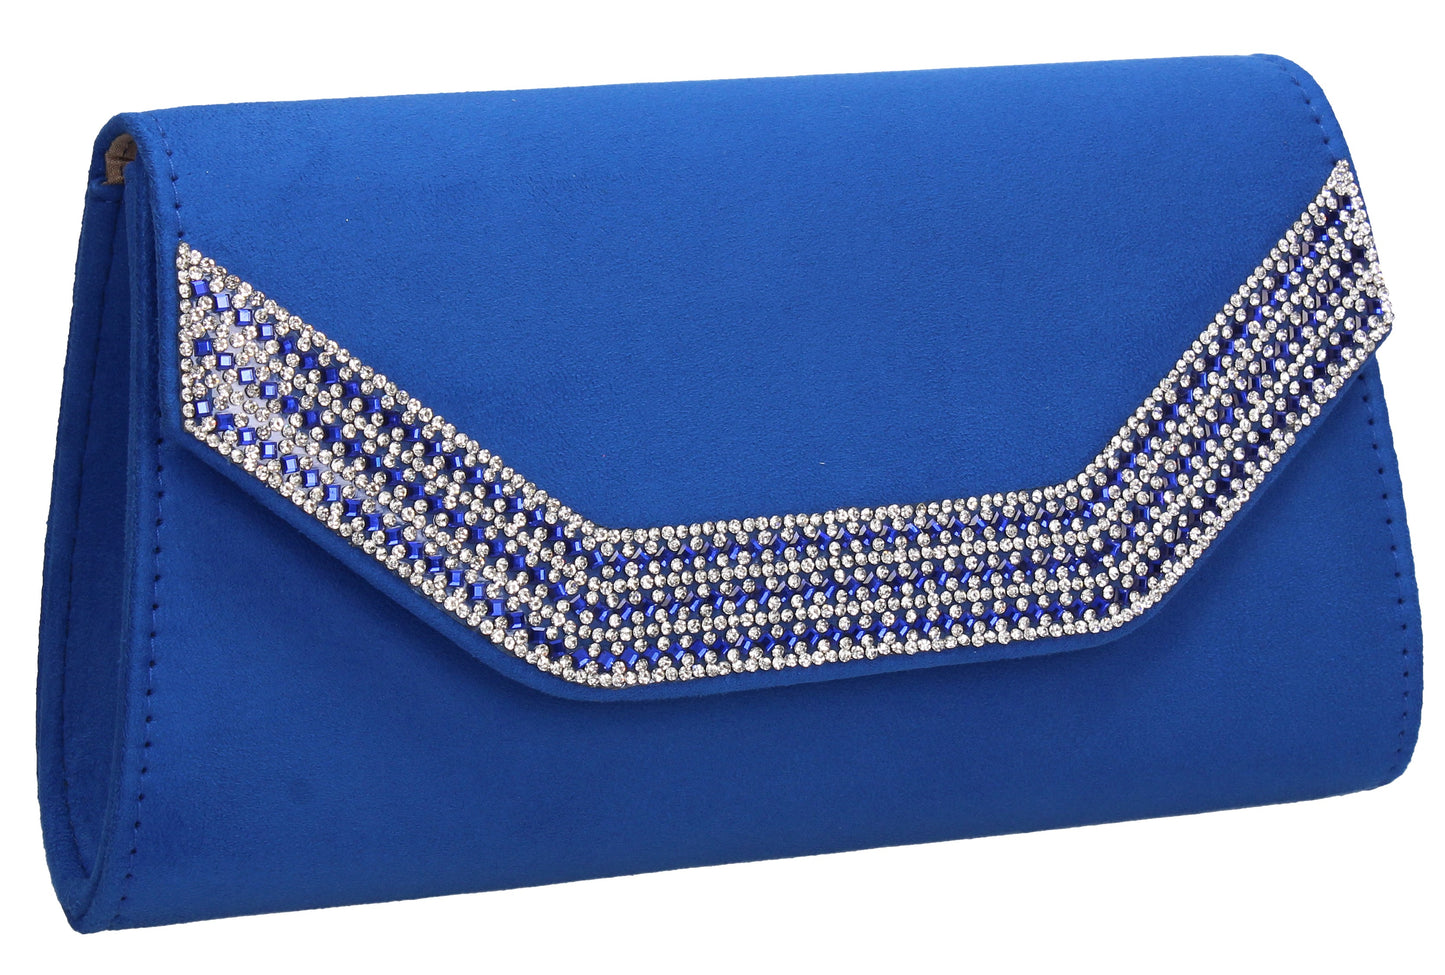 SWANKYSWANS Harper Clutch Bag Royal Blue Cute Cheap Clutch Bag For Weddings School and Work